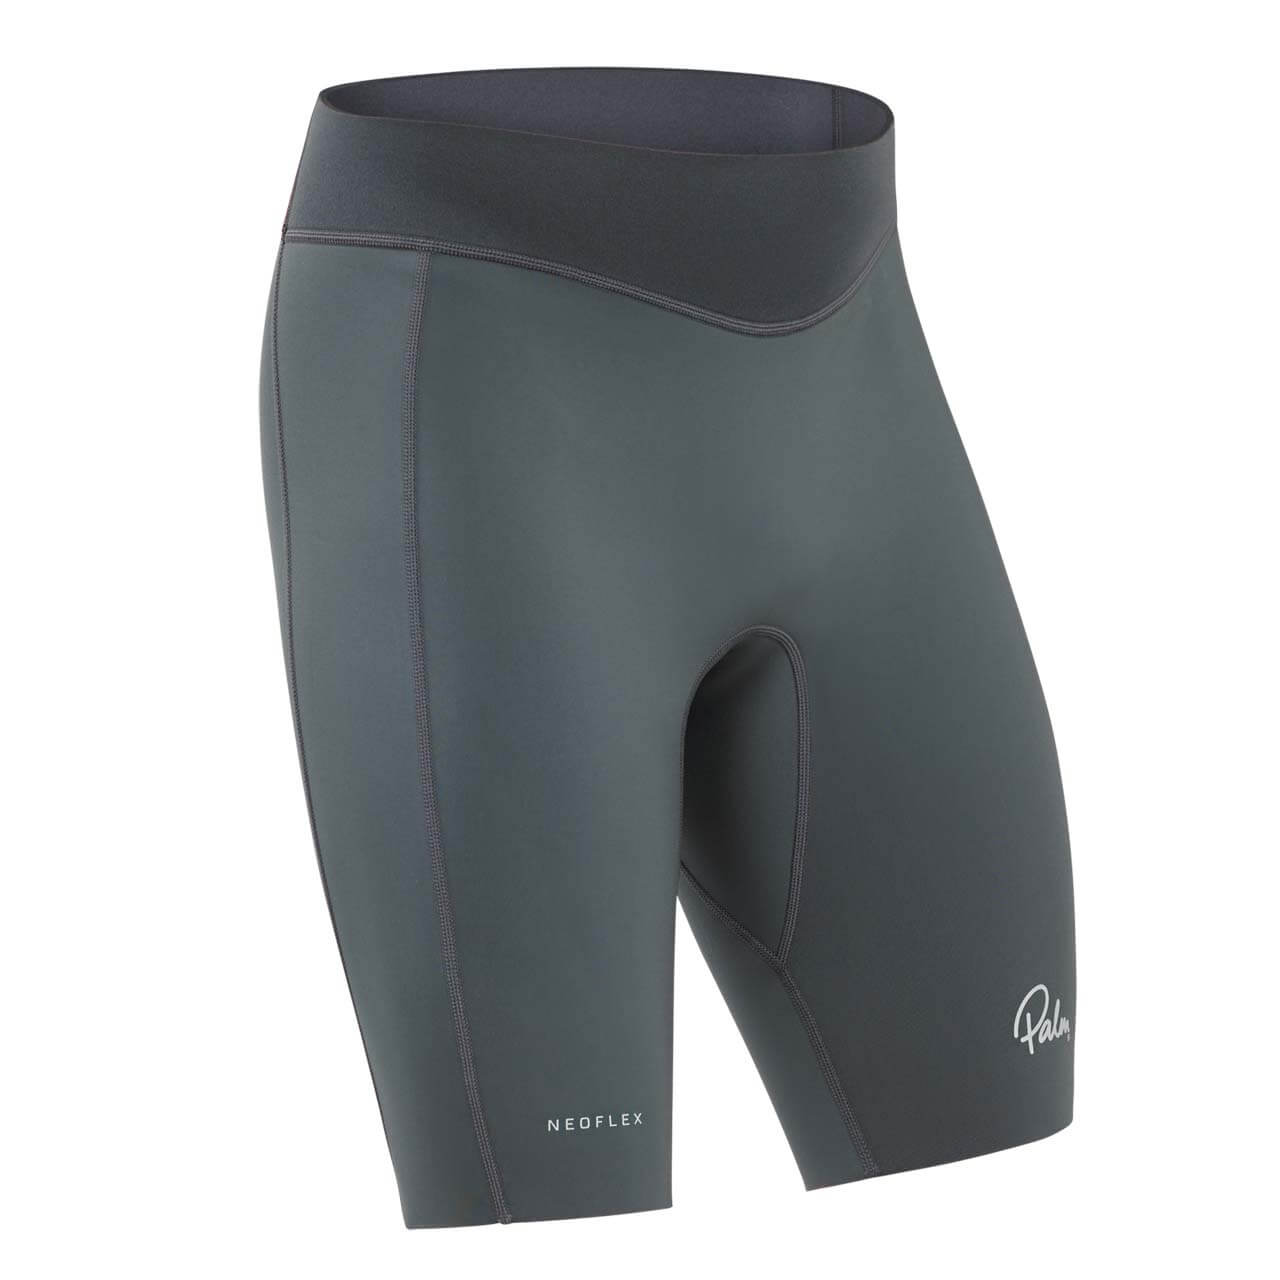 Palm Neoflex Shorts - Jet Grey, L